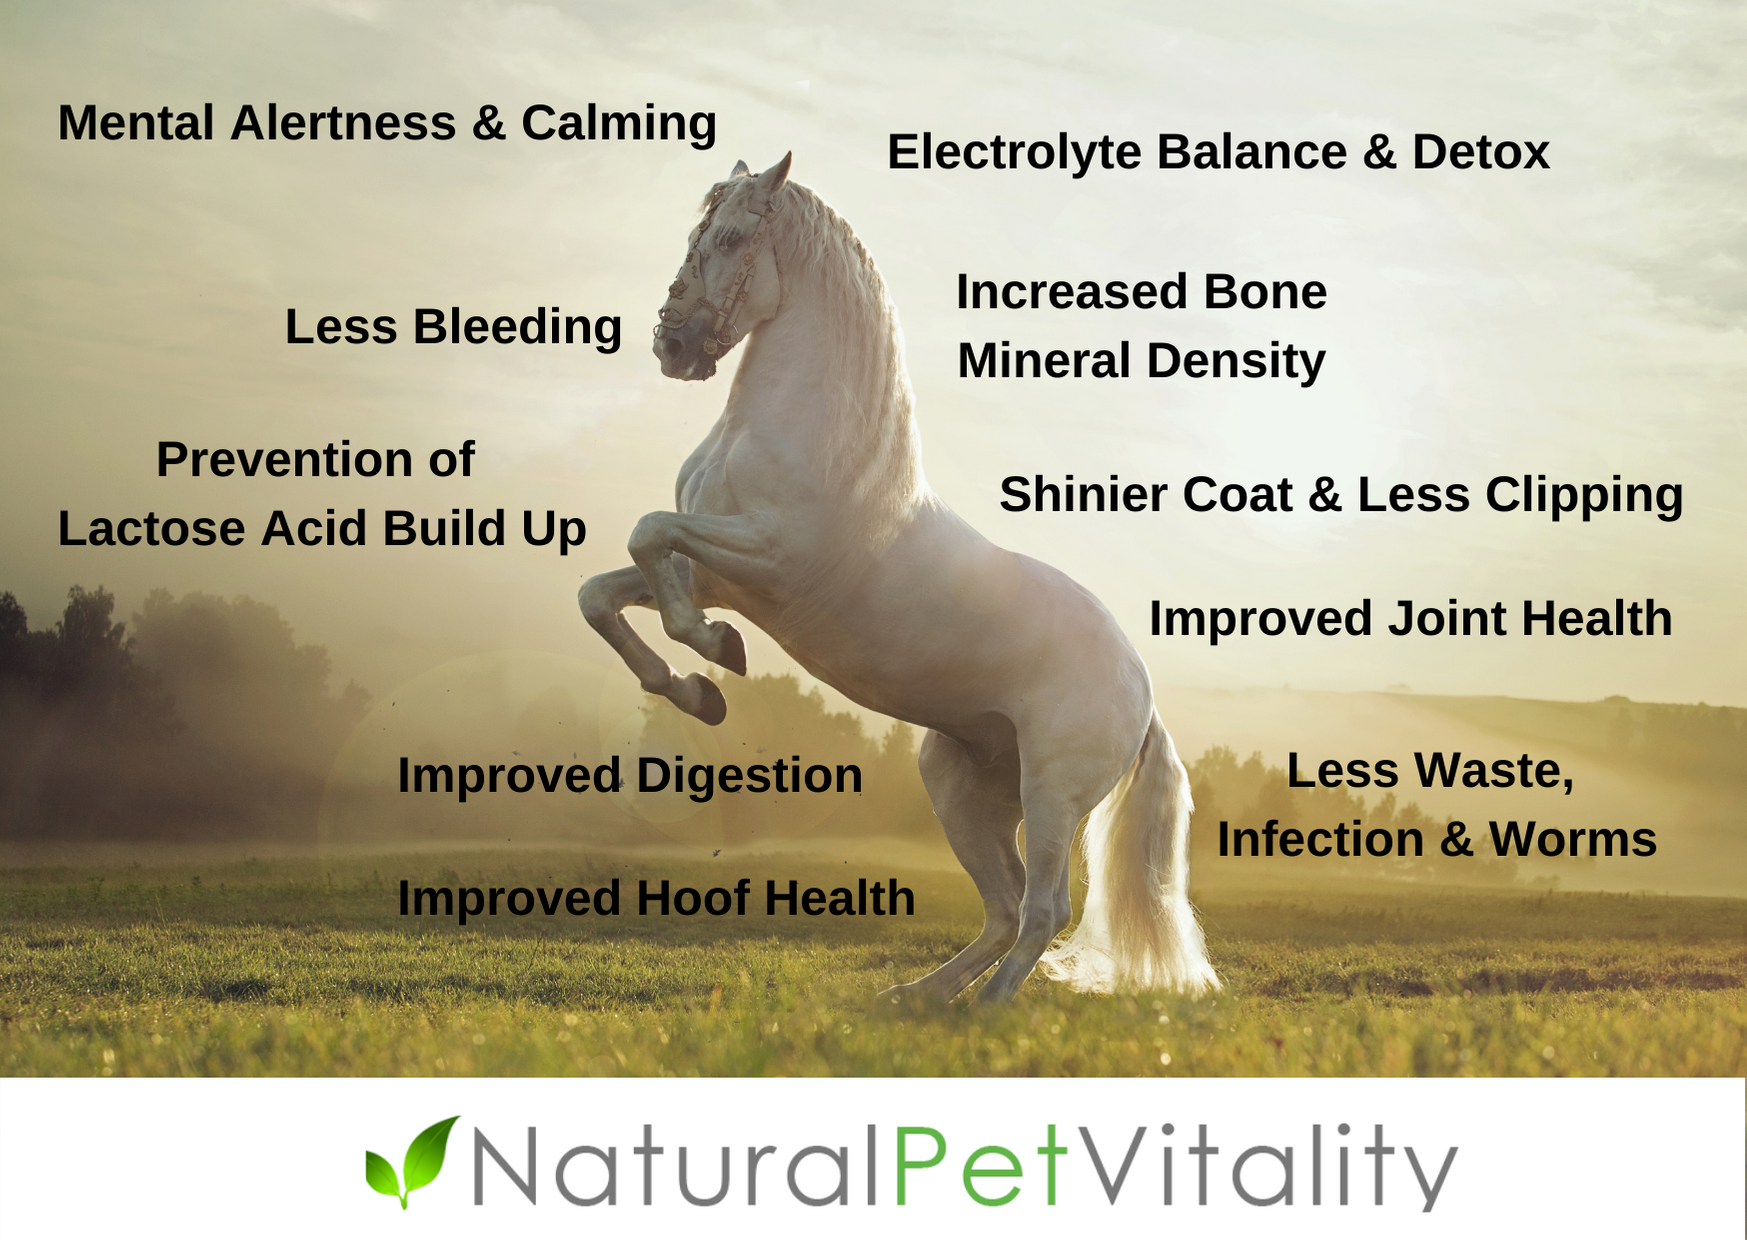 Benefits of Natural Pet Vitality